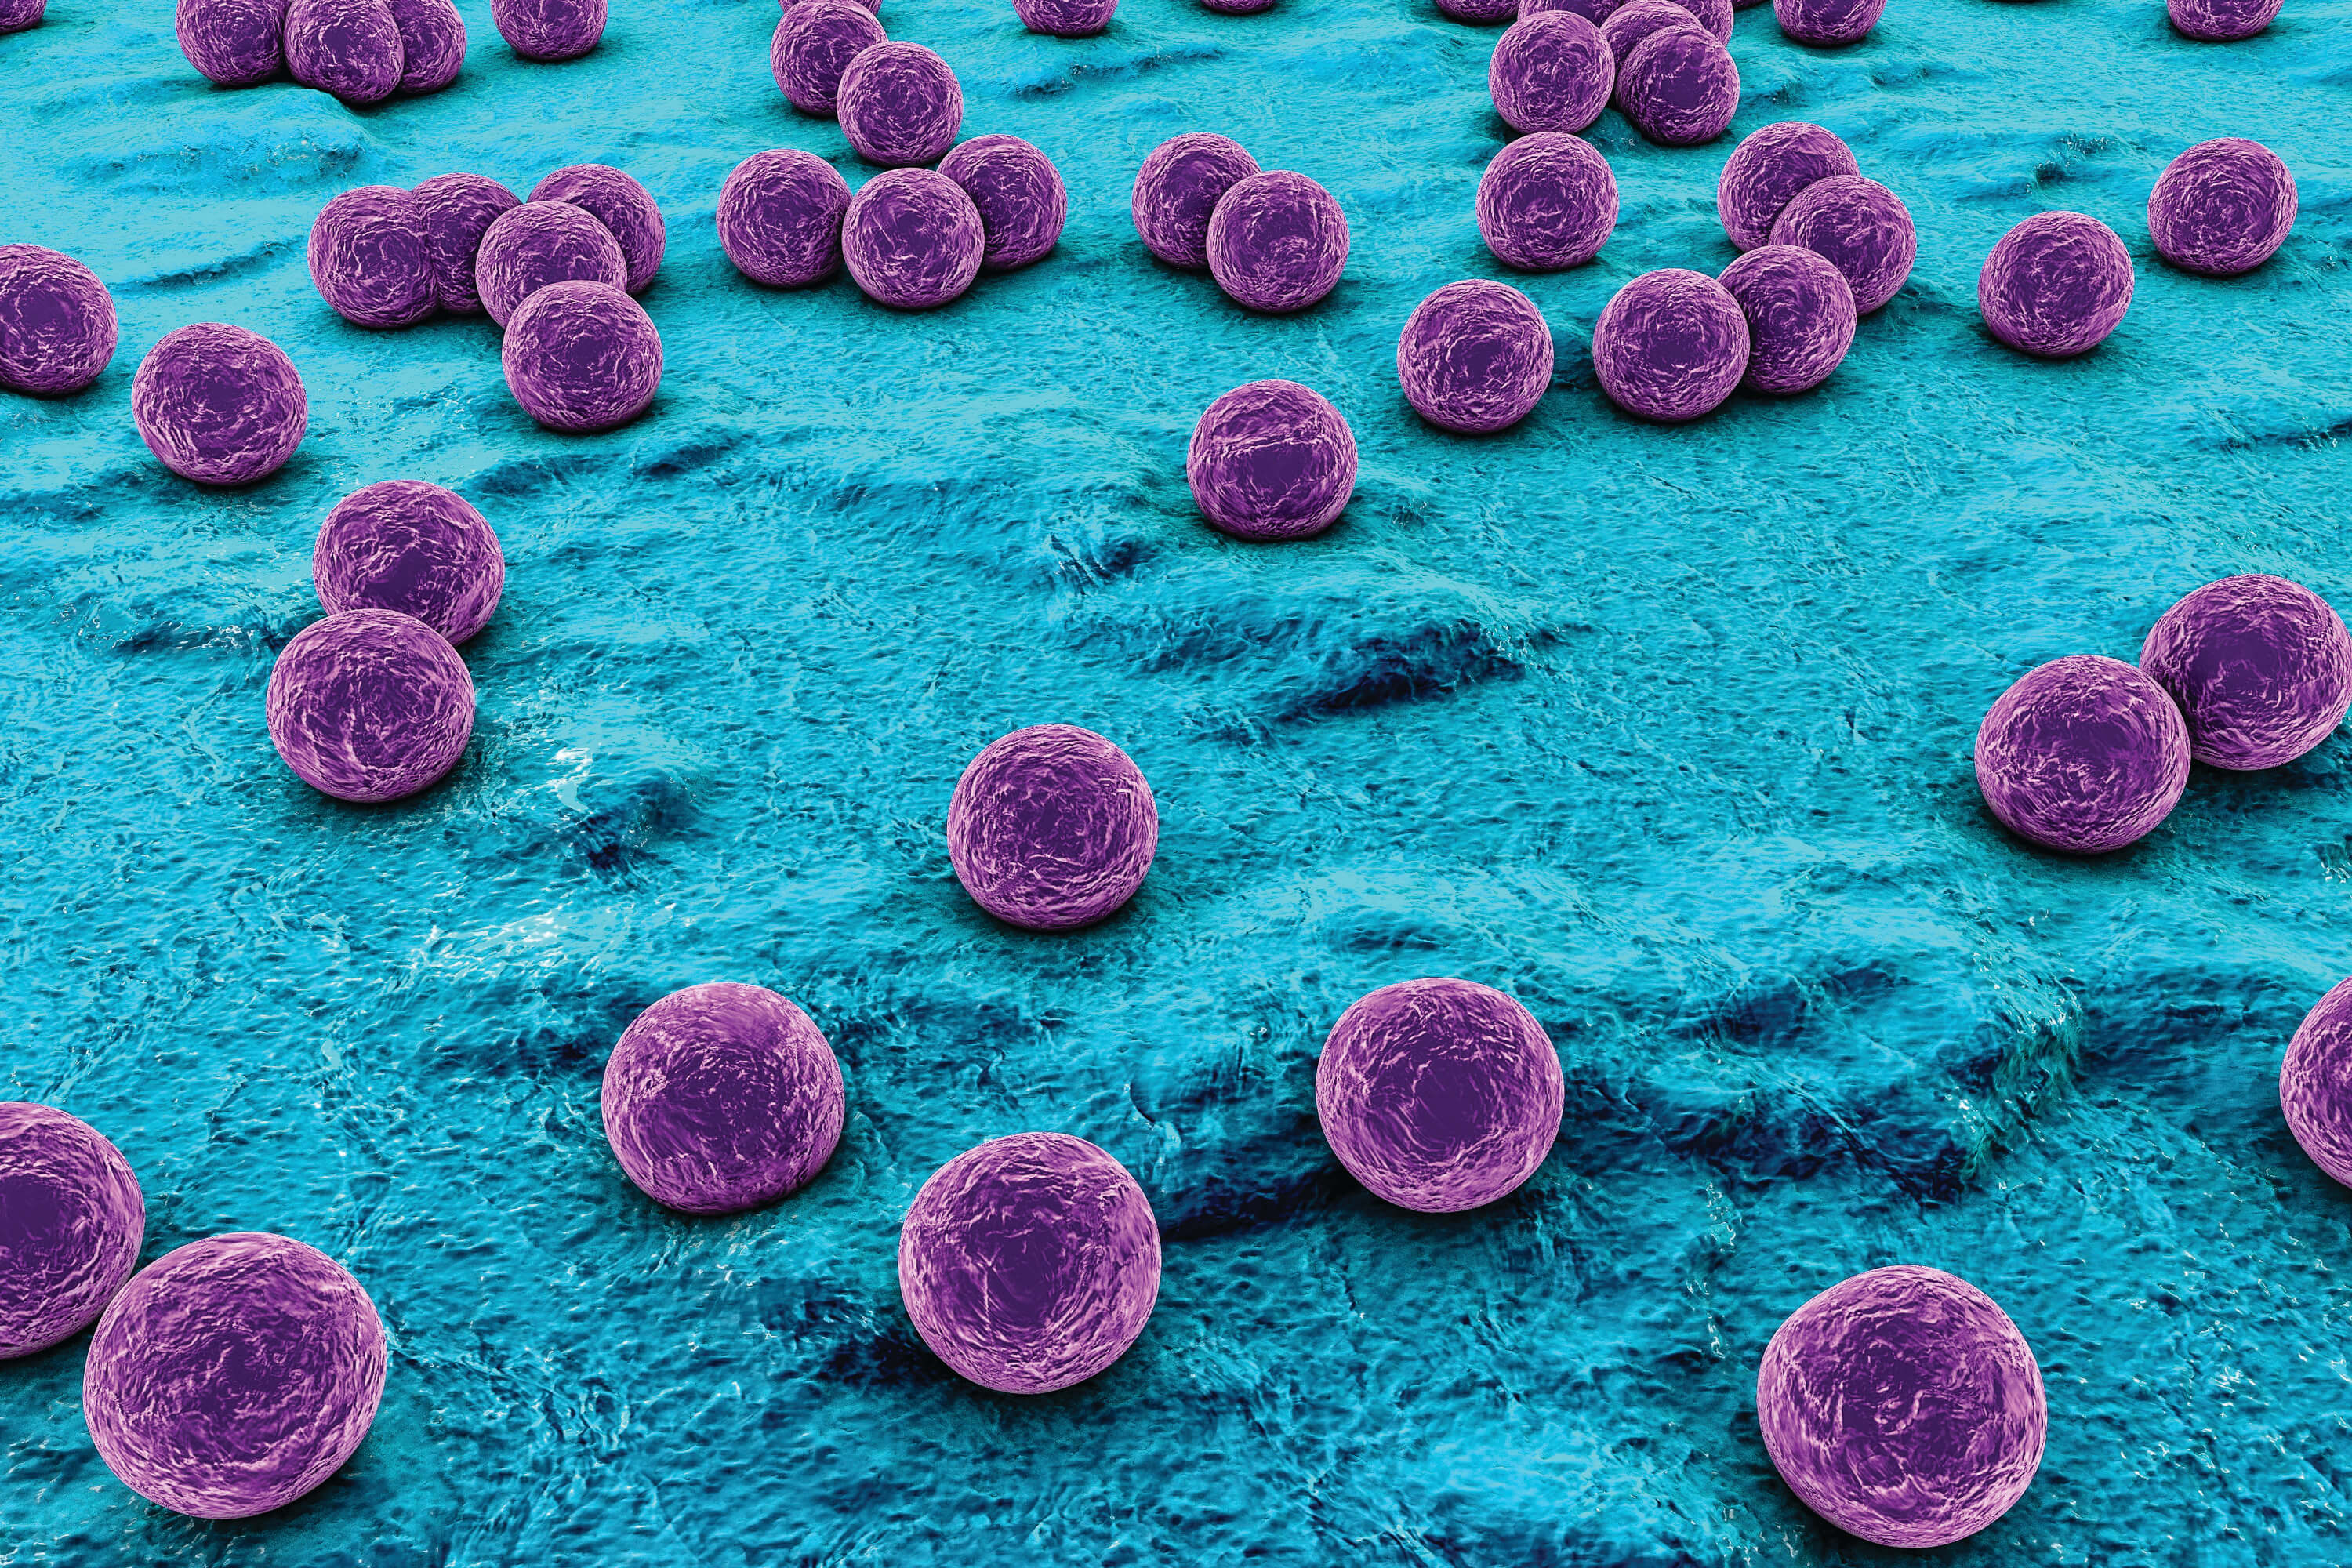 sterile_science-staphylococcus_01.jpg